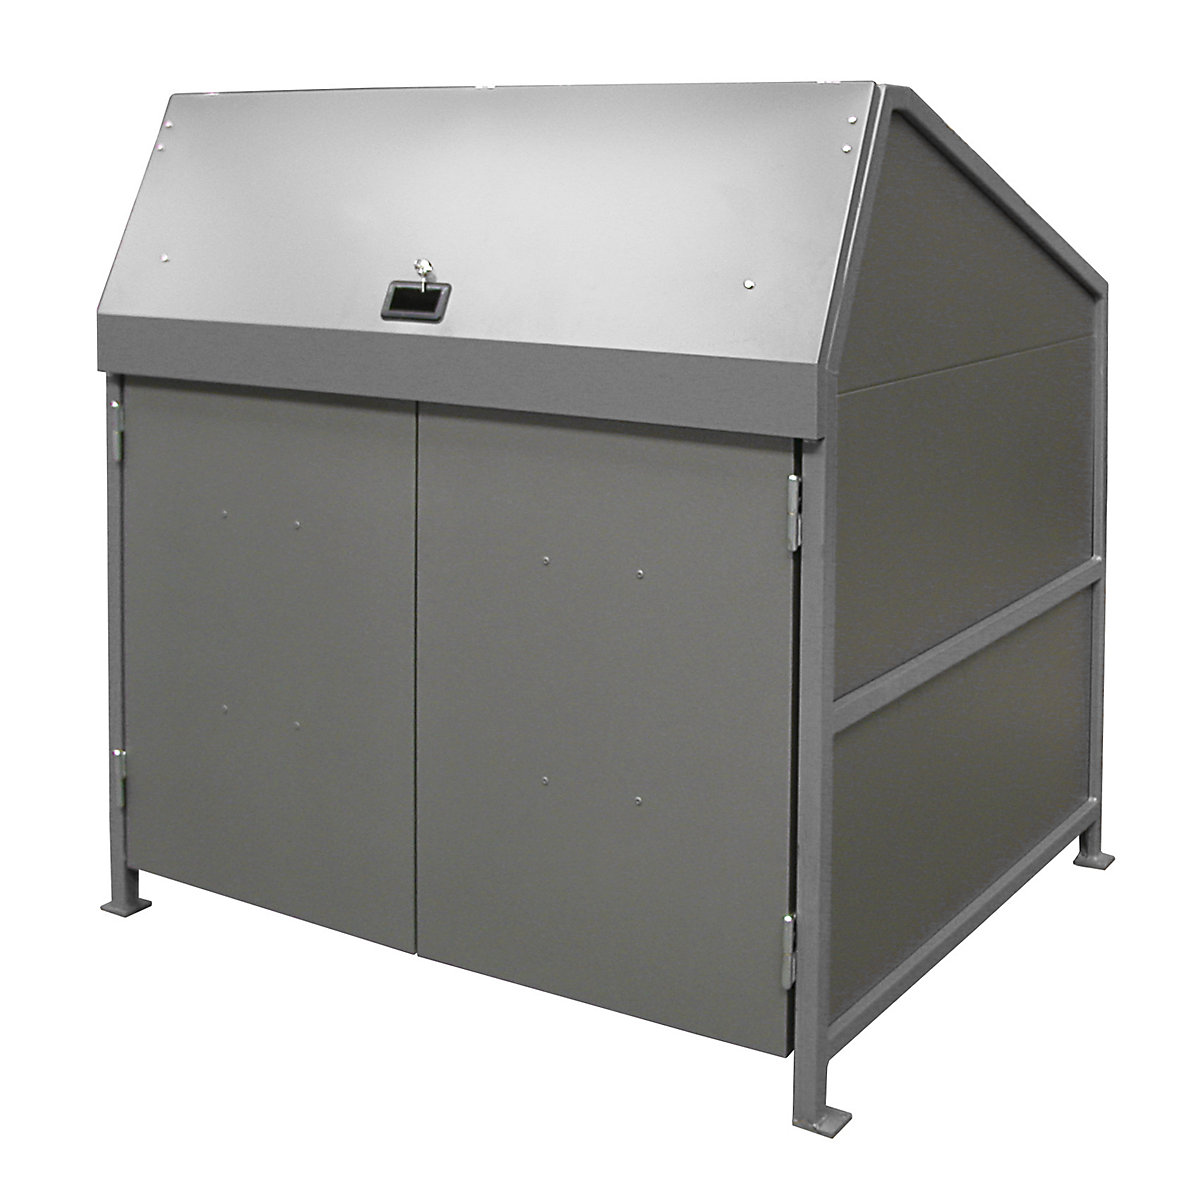 EUROKRAFTpro – Waste bin enclosures, enclosed on 4 sides, with doors, frame in grey